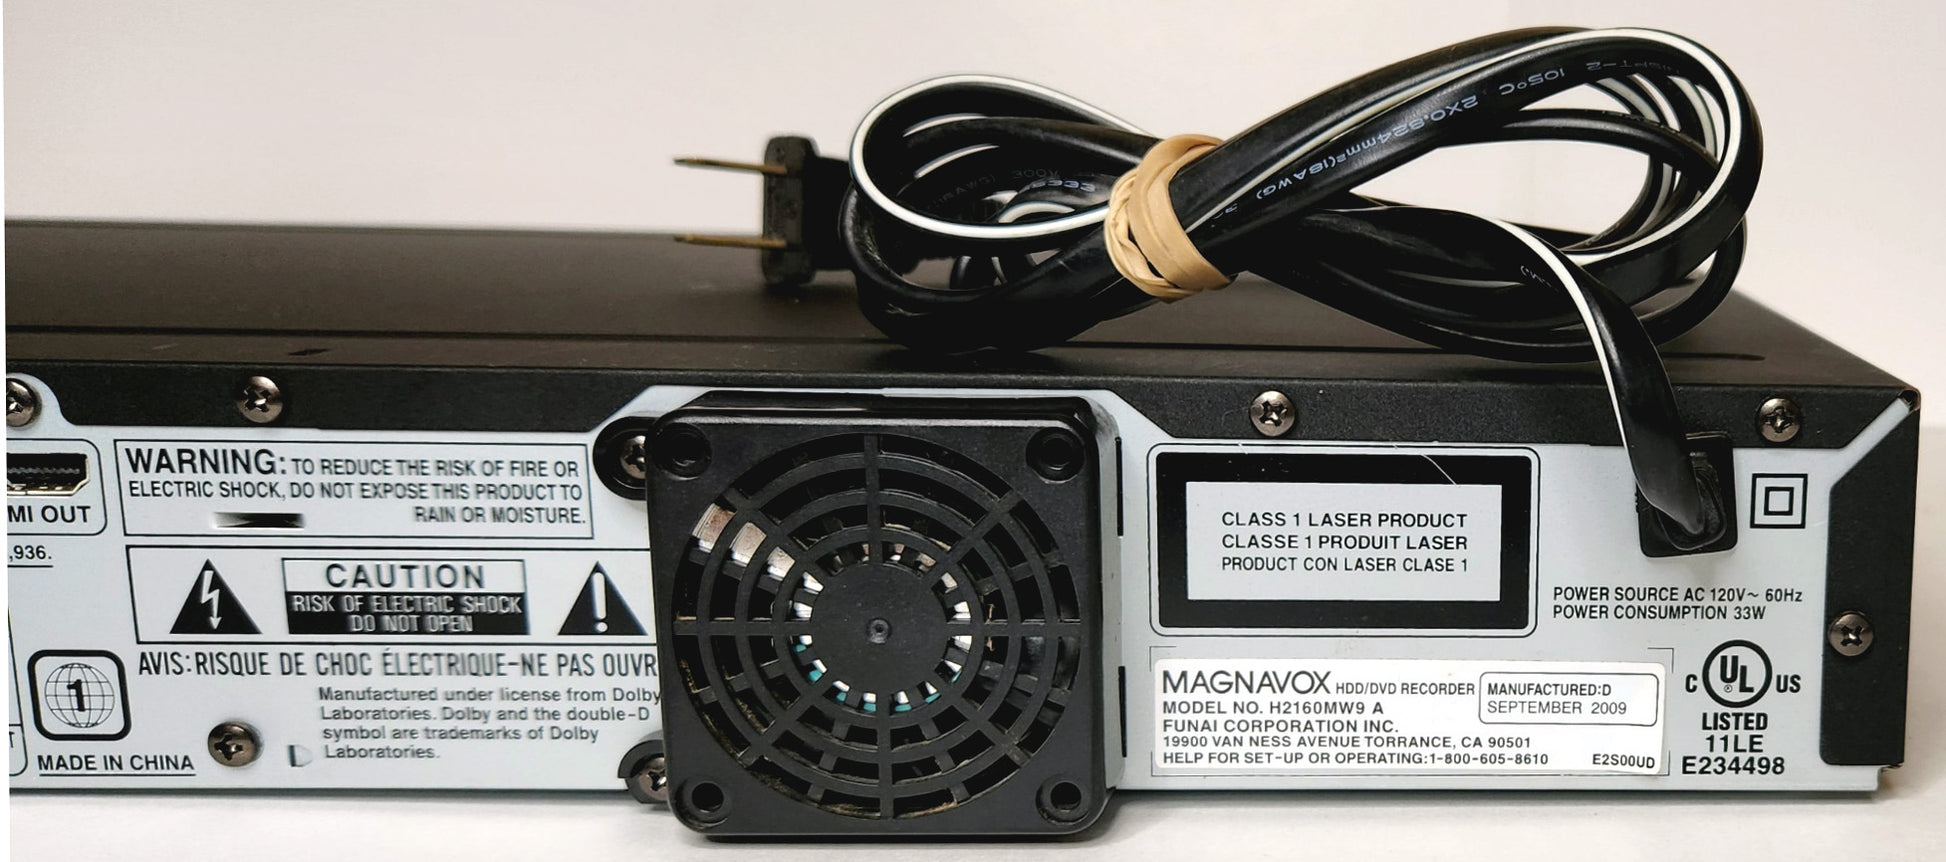 Magnavox H2160MW9 HDD/DVD Hard Disk Recorder - Label